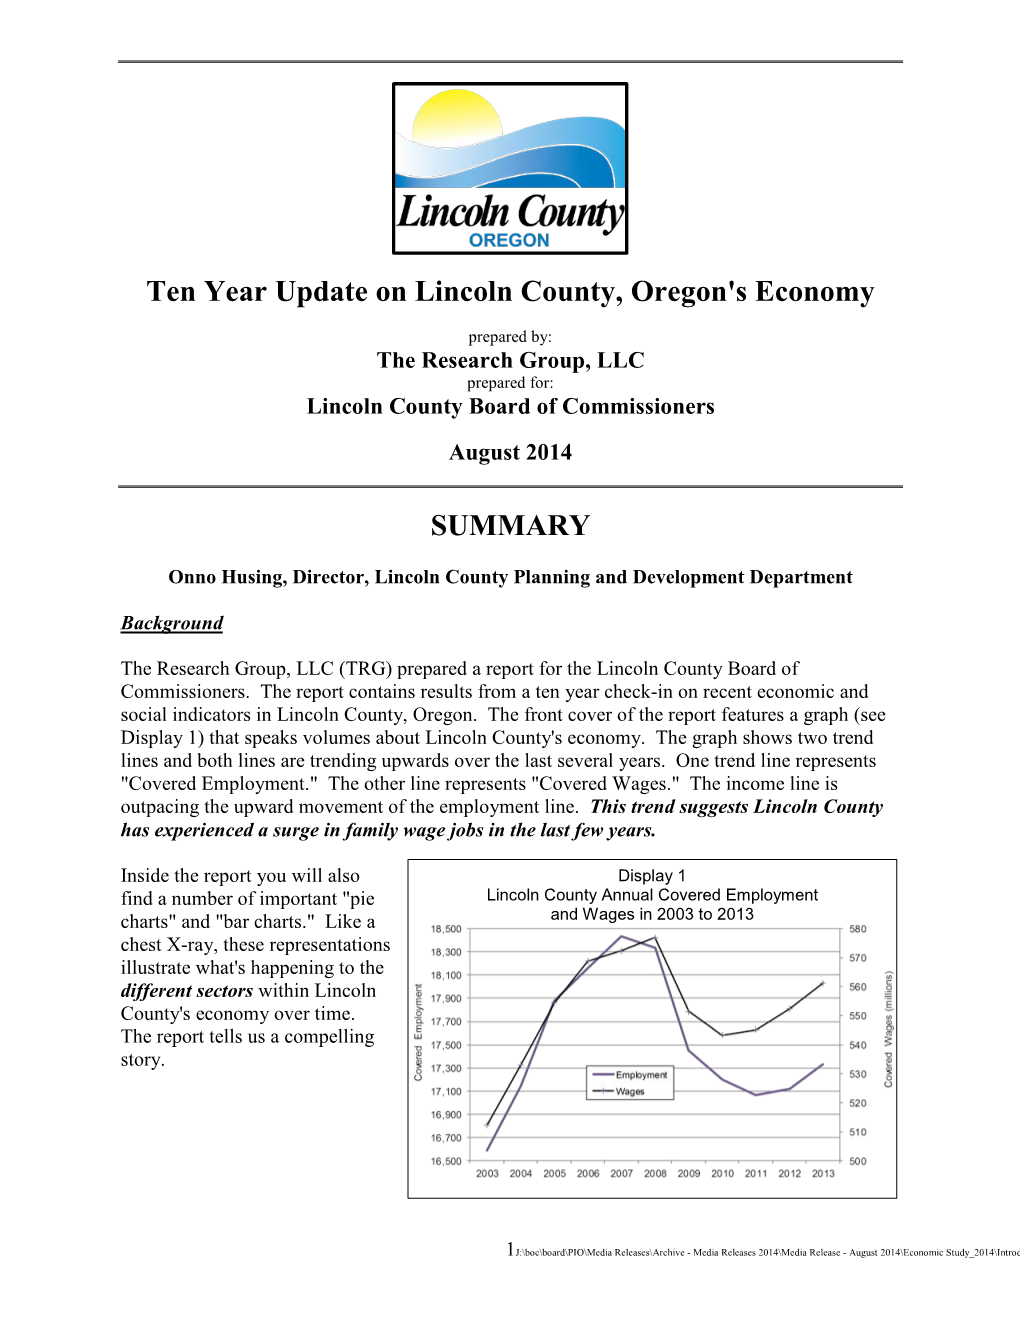 Introduction to Economic Study